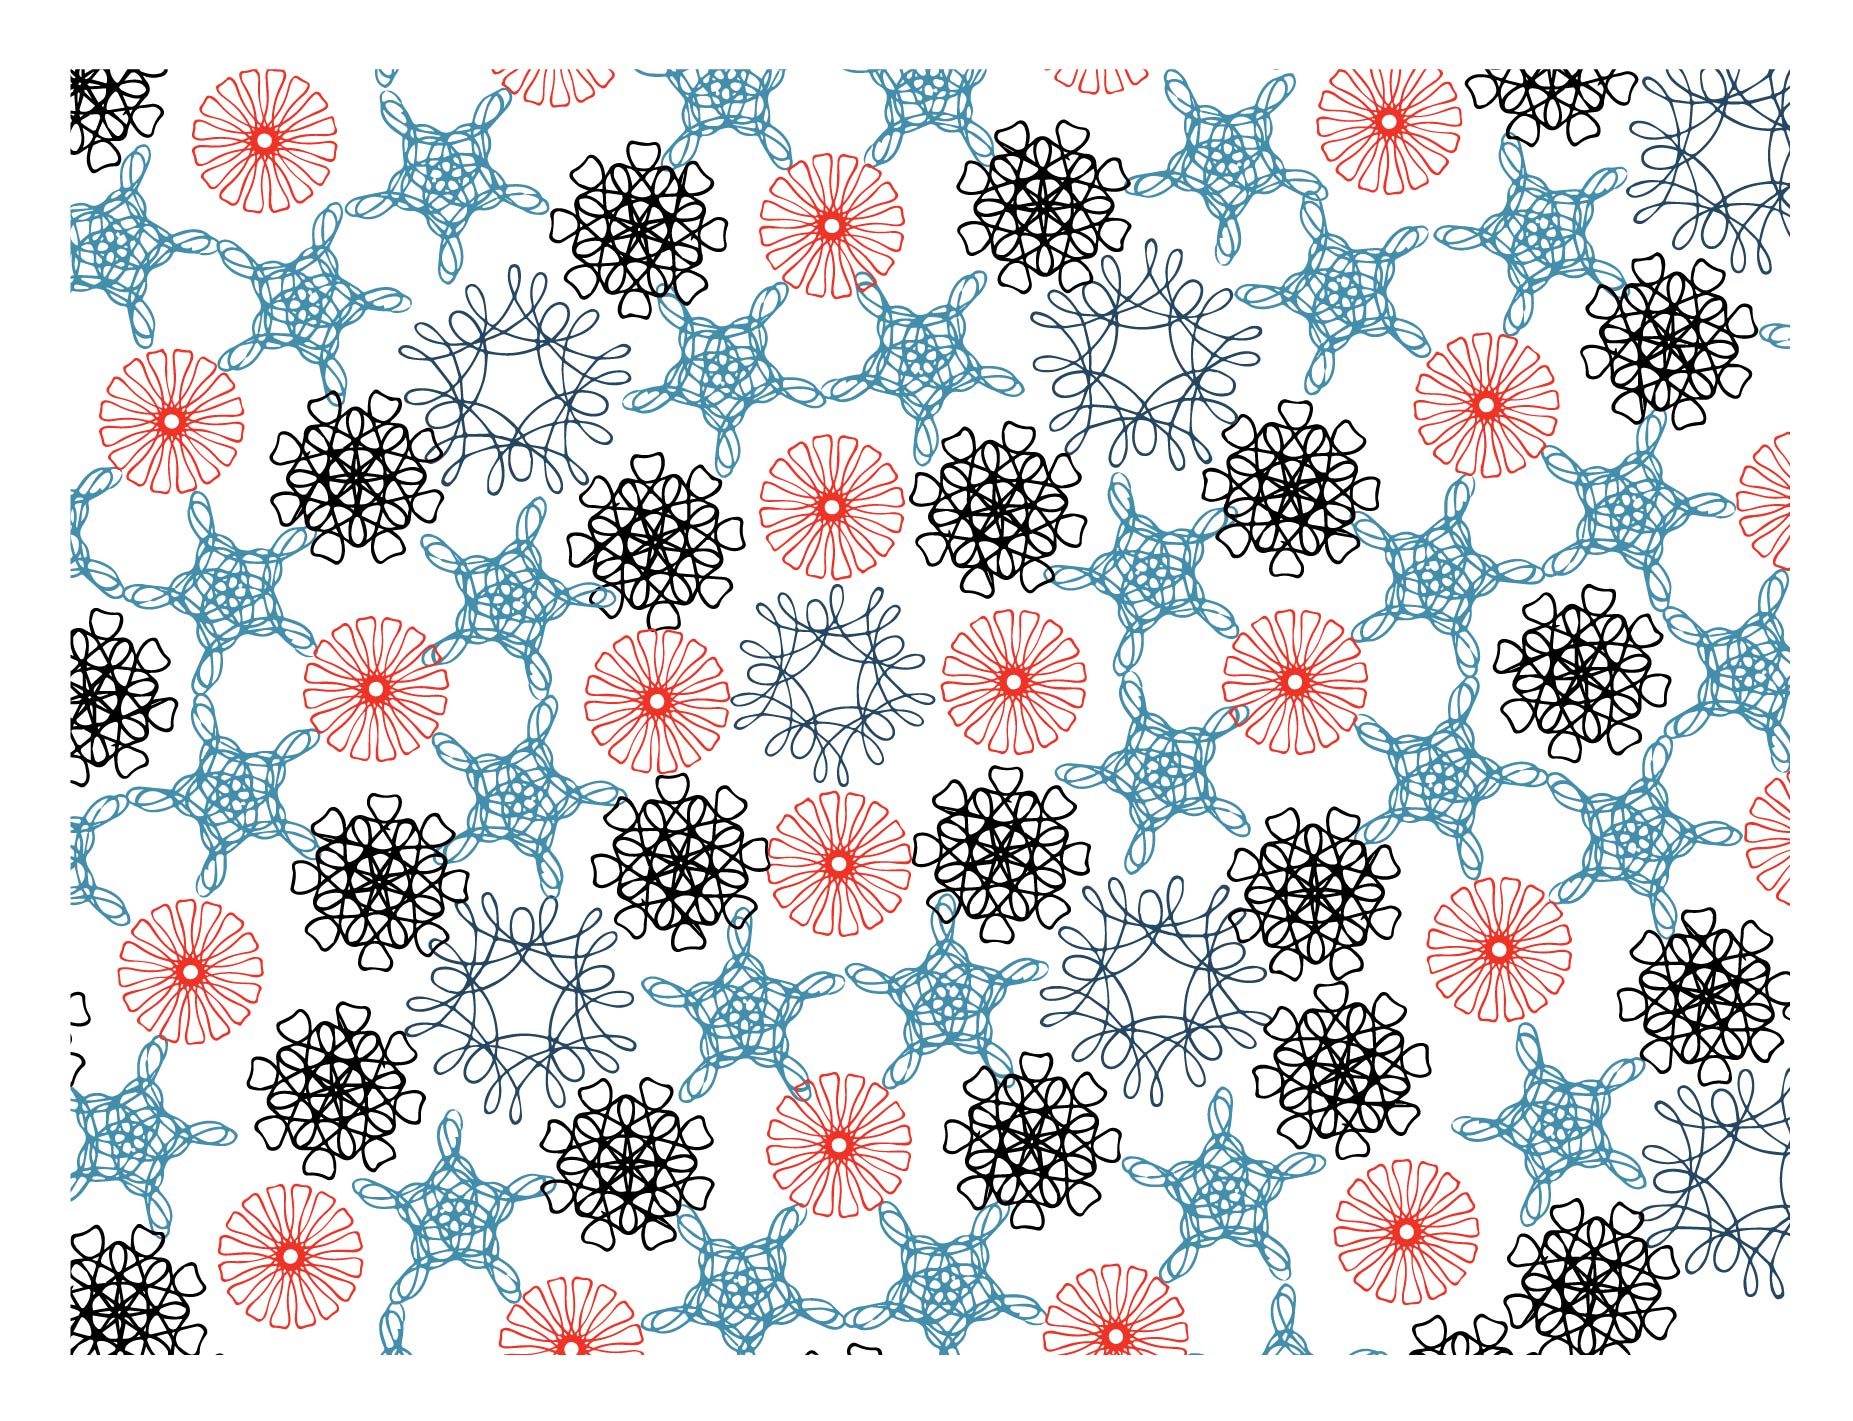 patterns-11.jpg